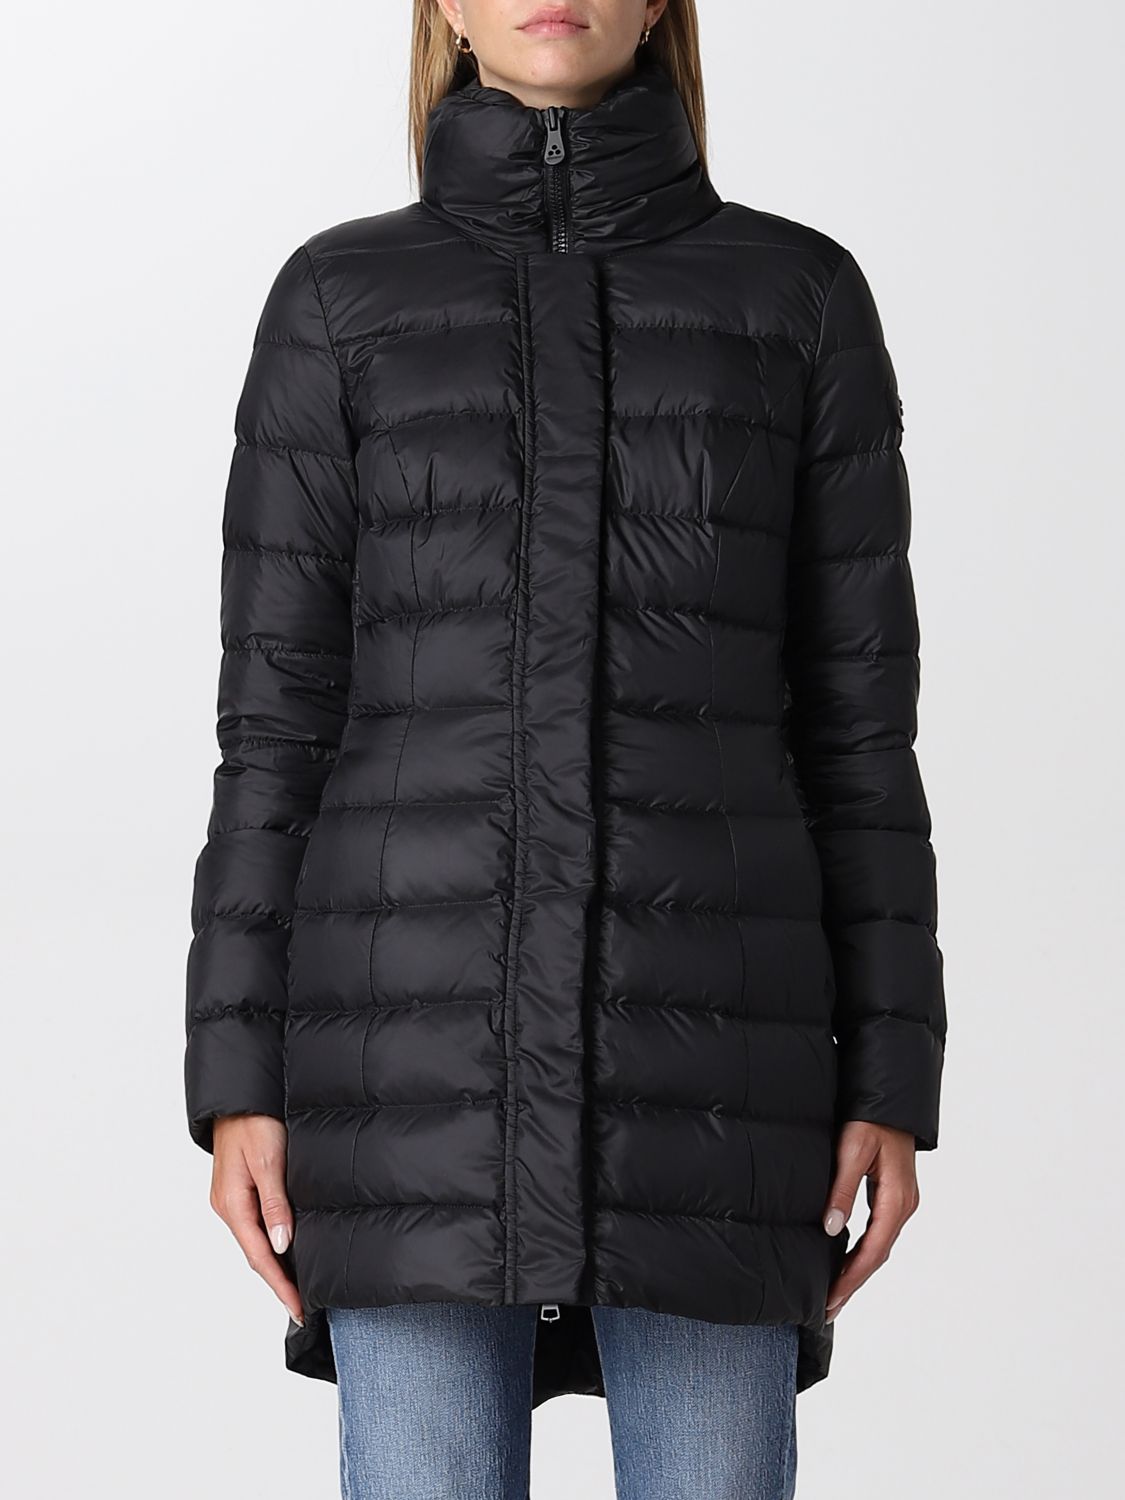 Peuterey Outlet: jacket for woman - Black | Peuterey jacket ...